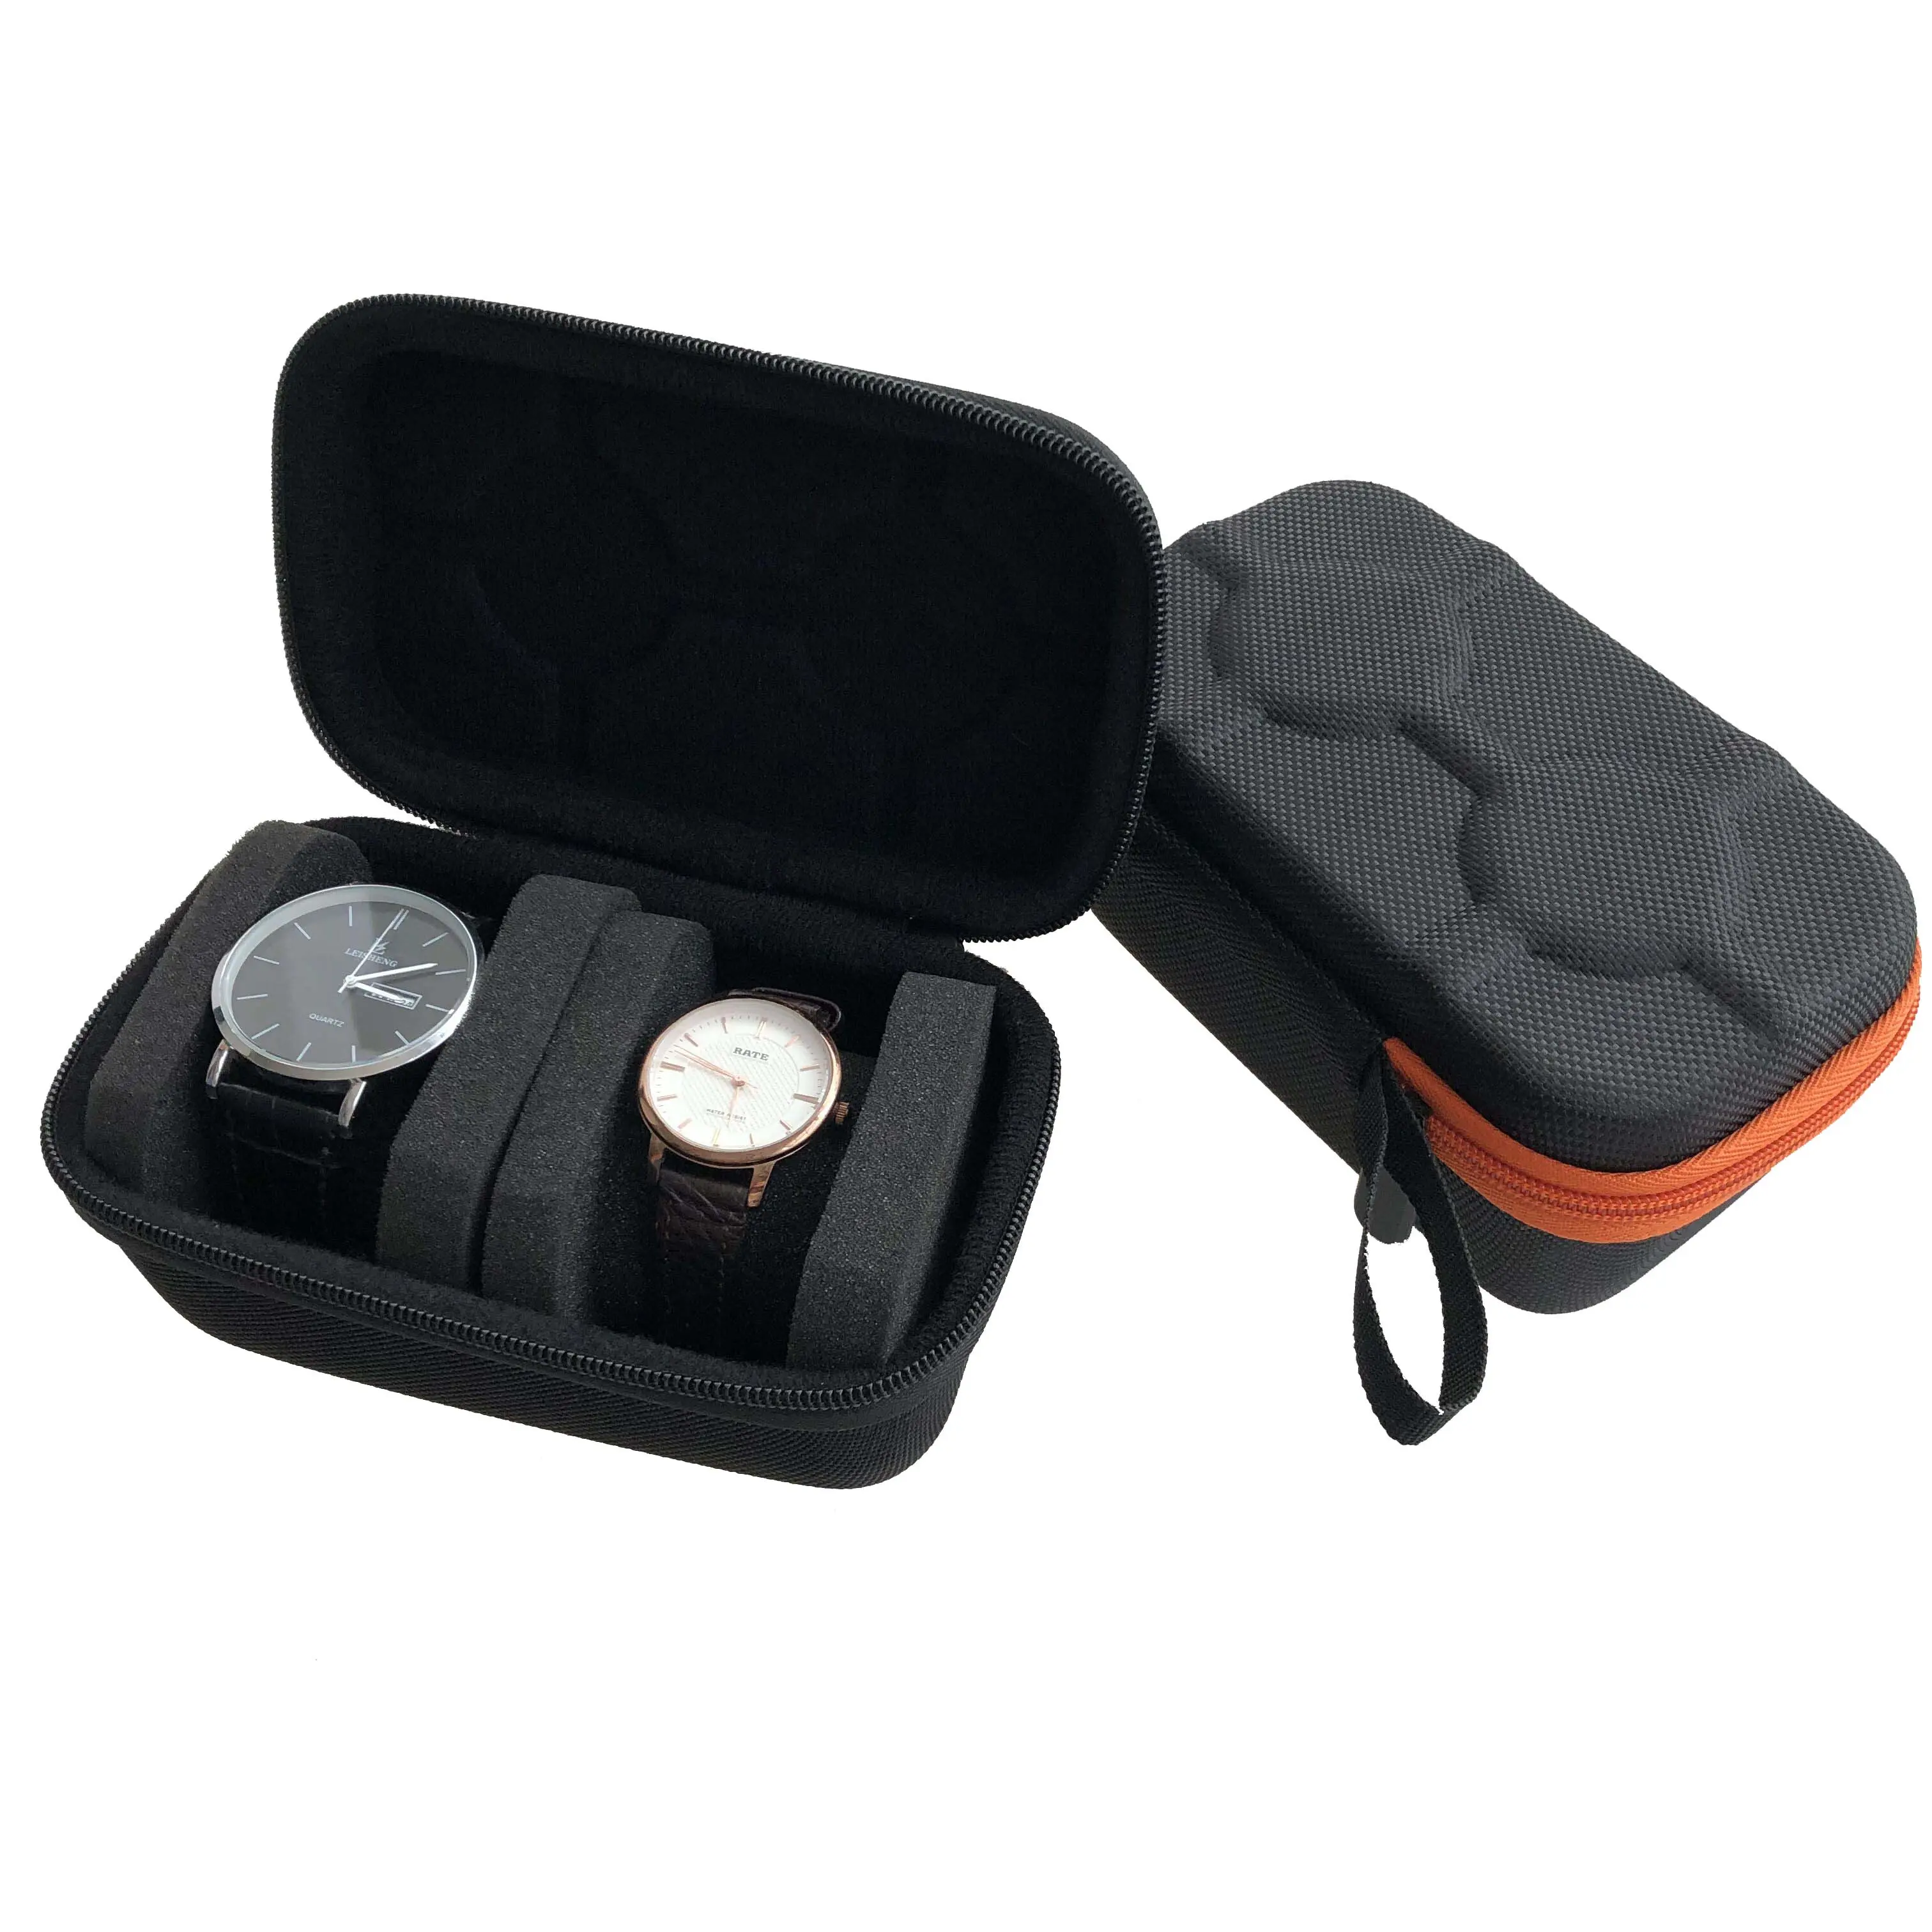 EVA Hard Shell 2 Slots Watch Storage Display Case Travel Watch Pouch with Foam